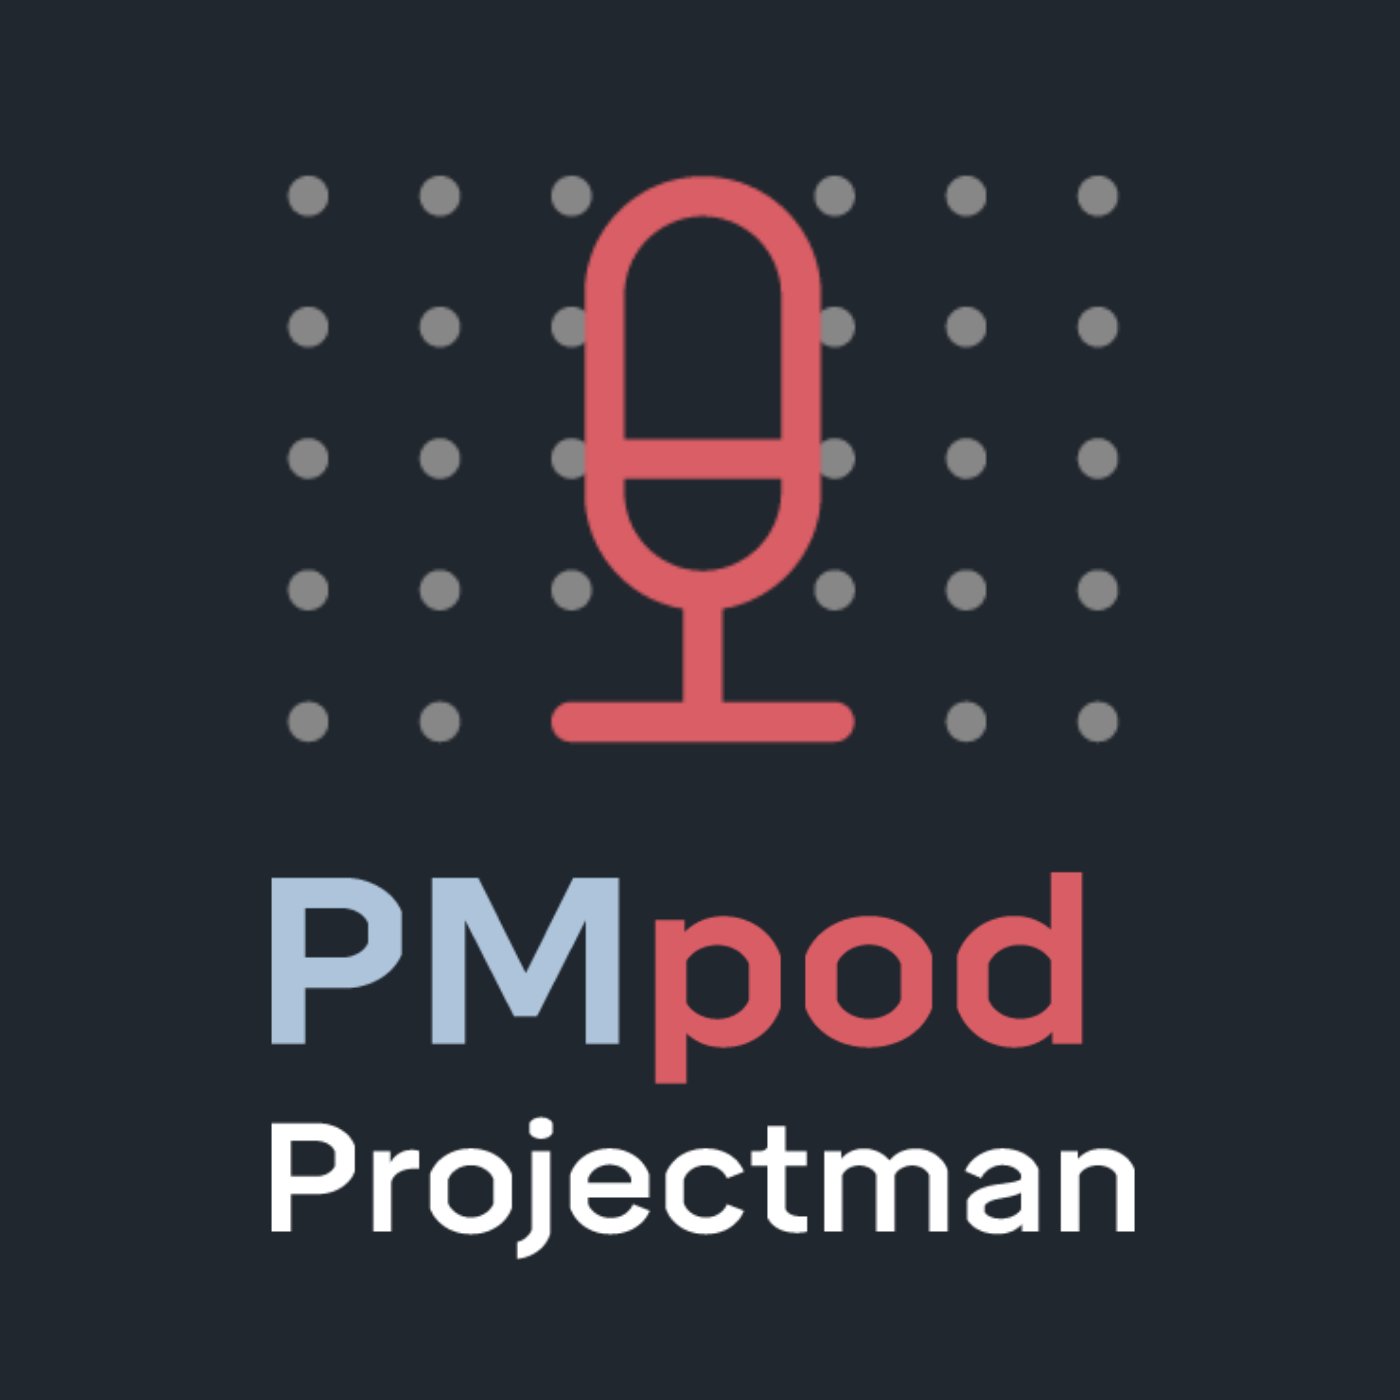 PMpod Projectman